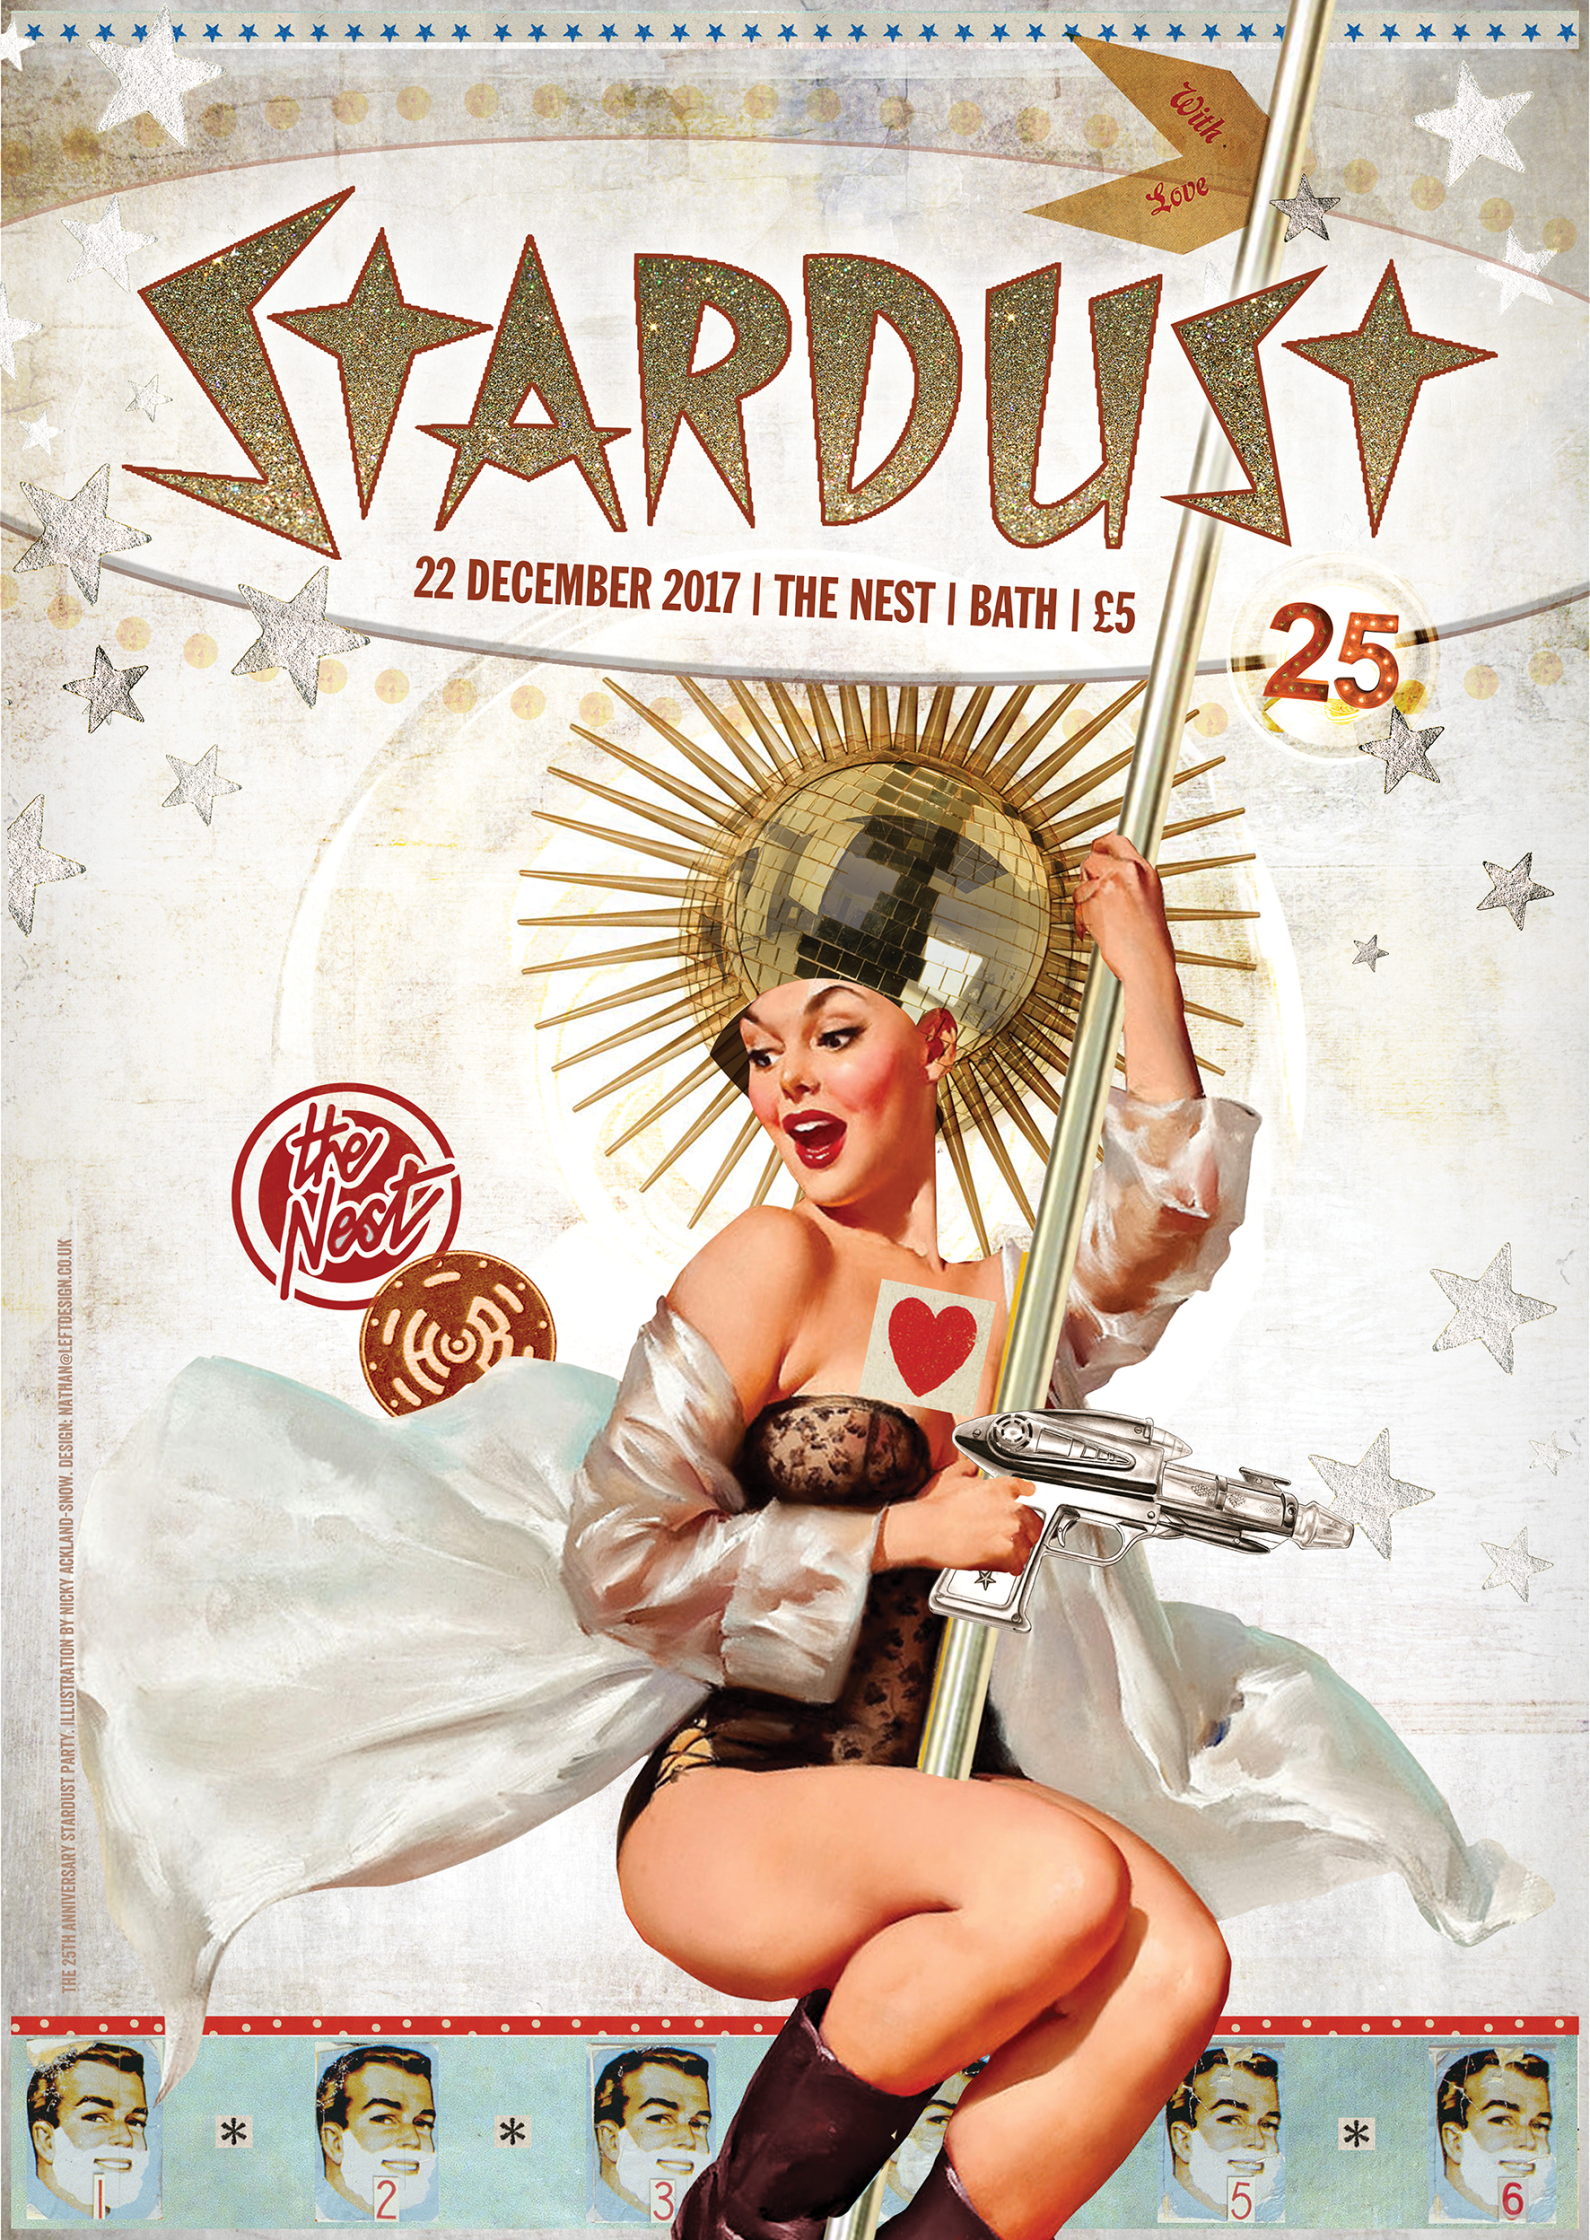 Stardust 25th Poster Image.jpg